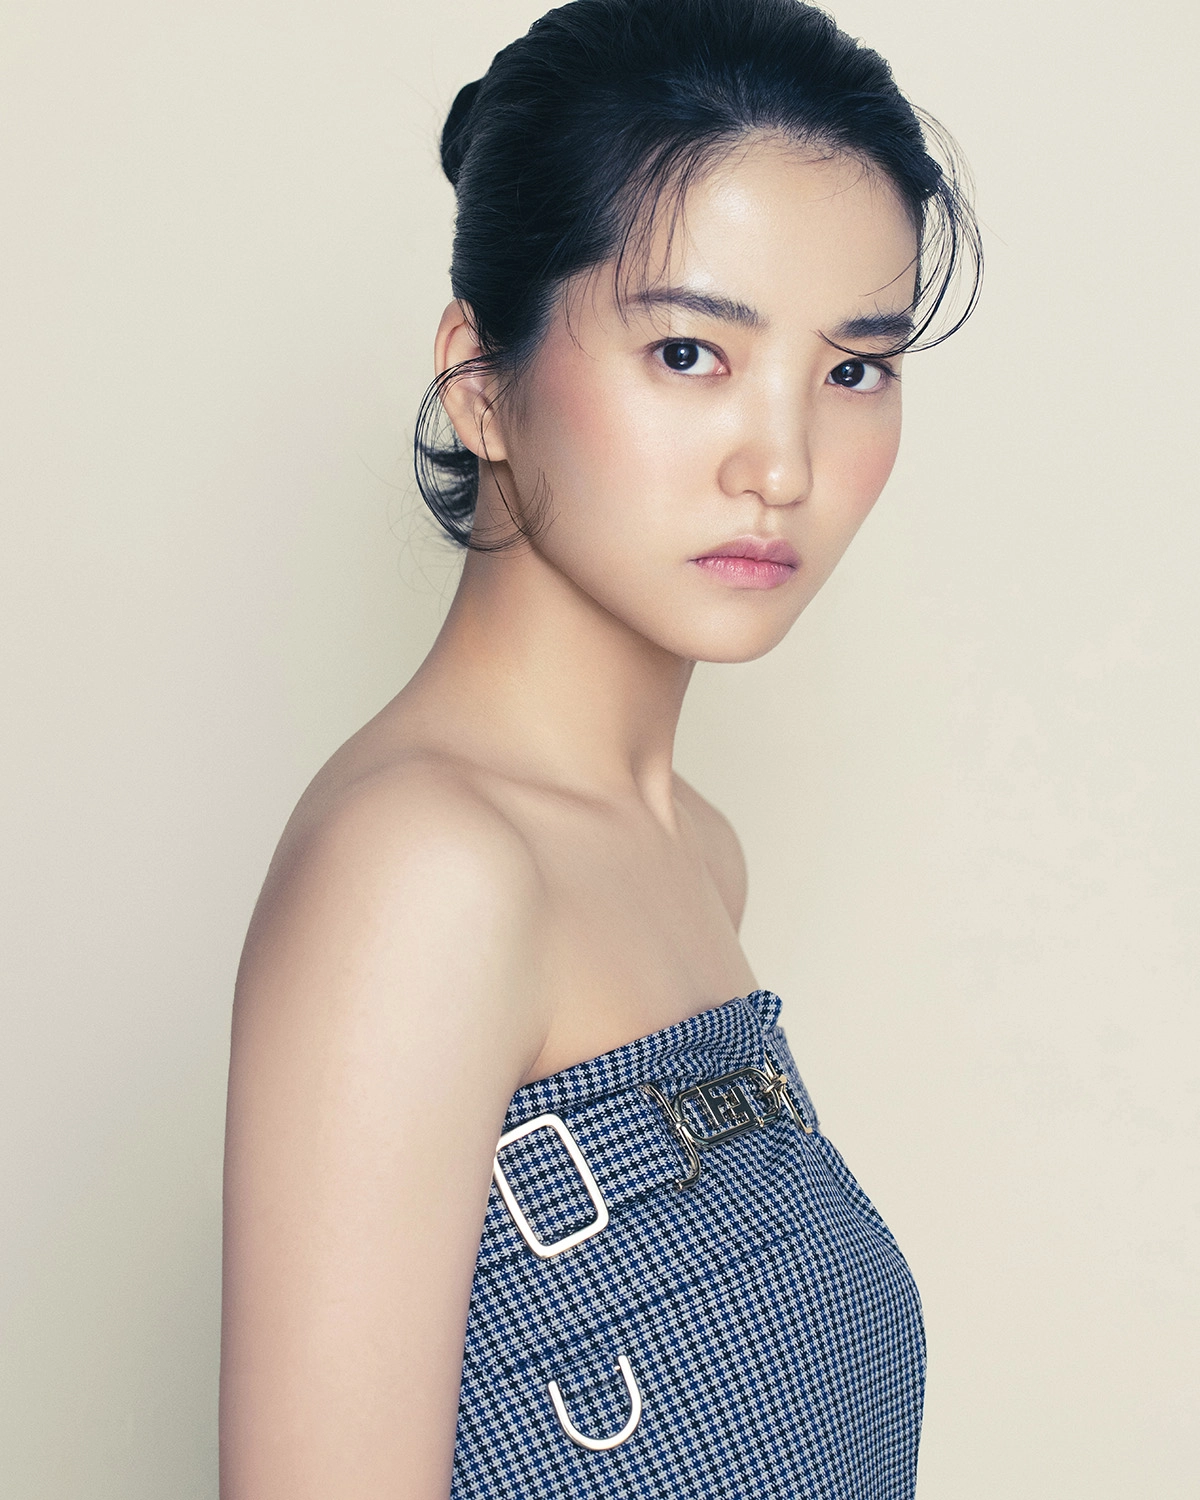 Kim Tae-ri covers Vogue Hong Kong August 2022 by Kim Yeongjun